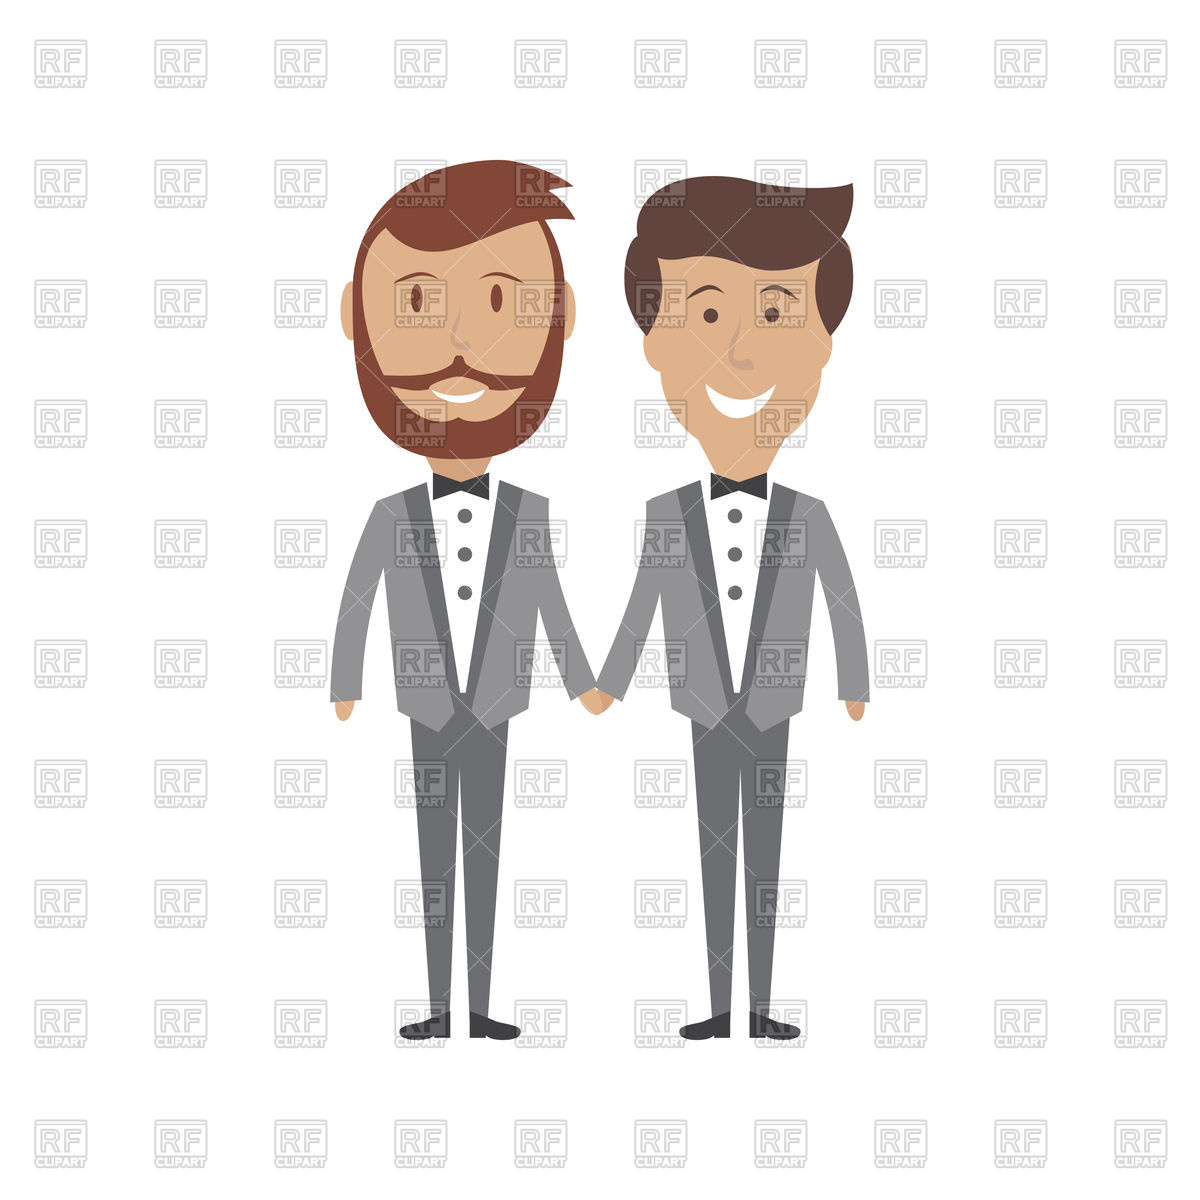 Culture, dutch, gay, legal, marriage icon | Icon search engine